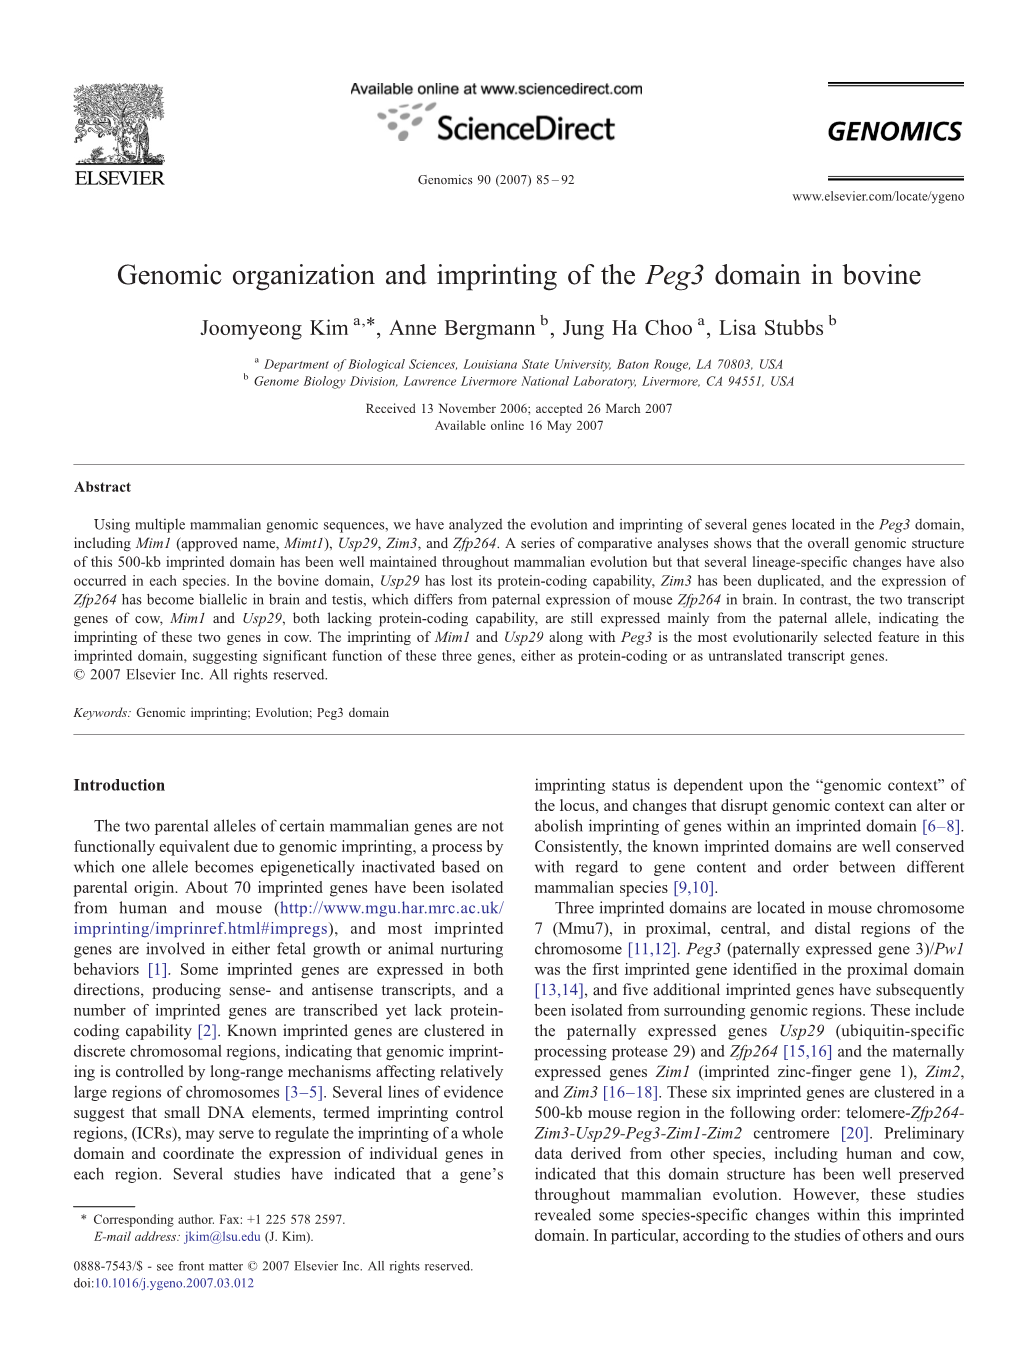 Genomic Organization and Imprinting of the Peg3 Domain in Bovine ⁎ Joomyeong Kim A, , Anne Bergmann B, Jung Ha Choo A, Lisa Stubbs B